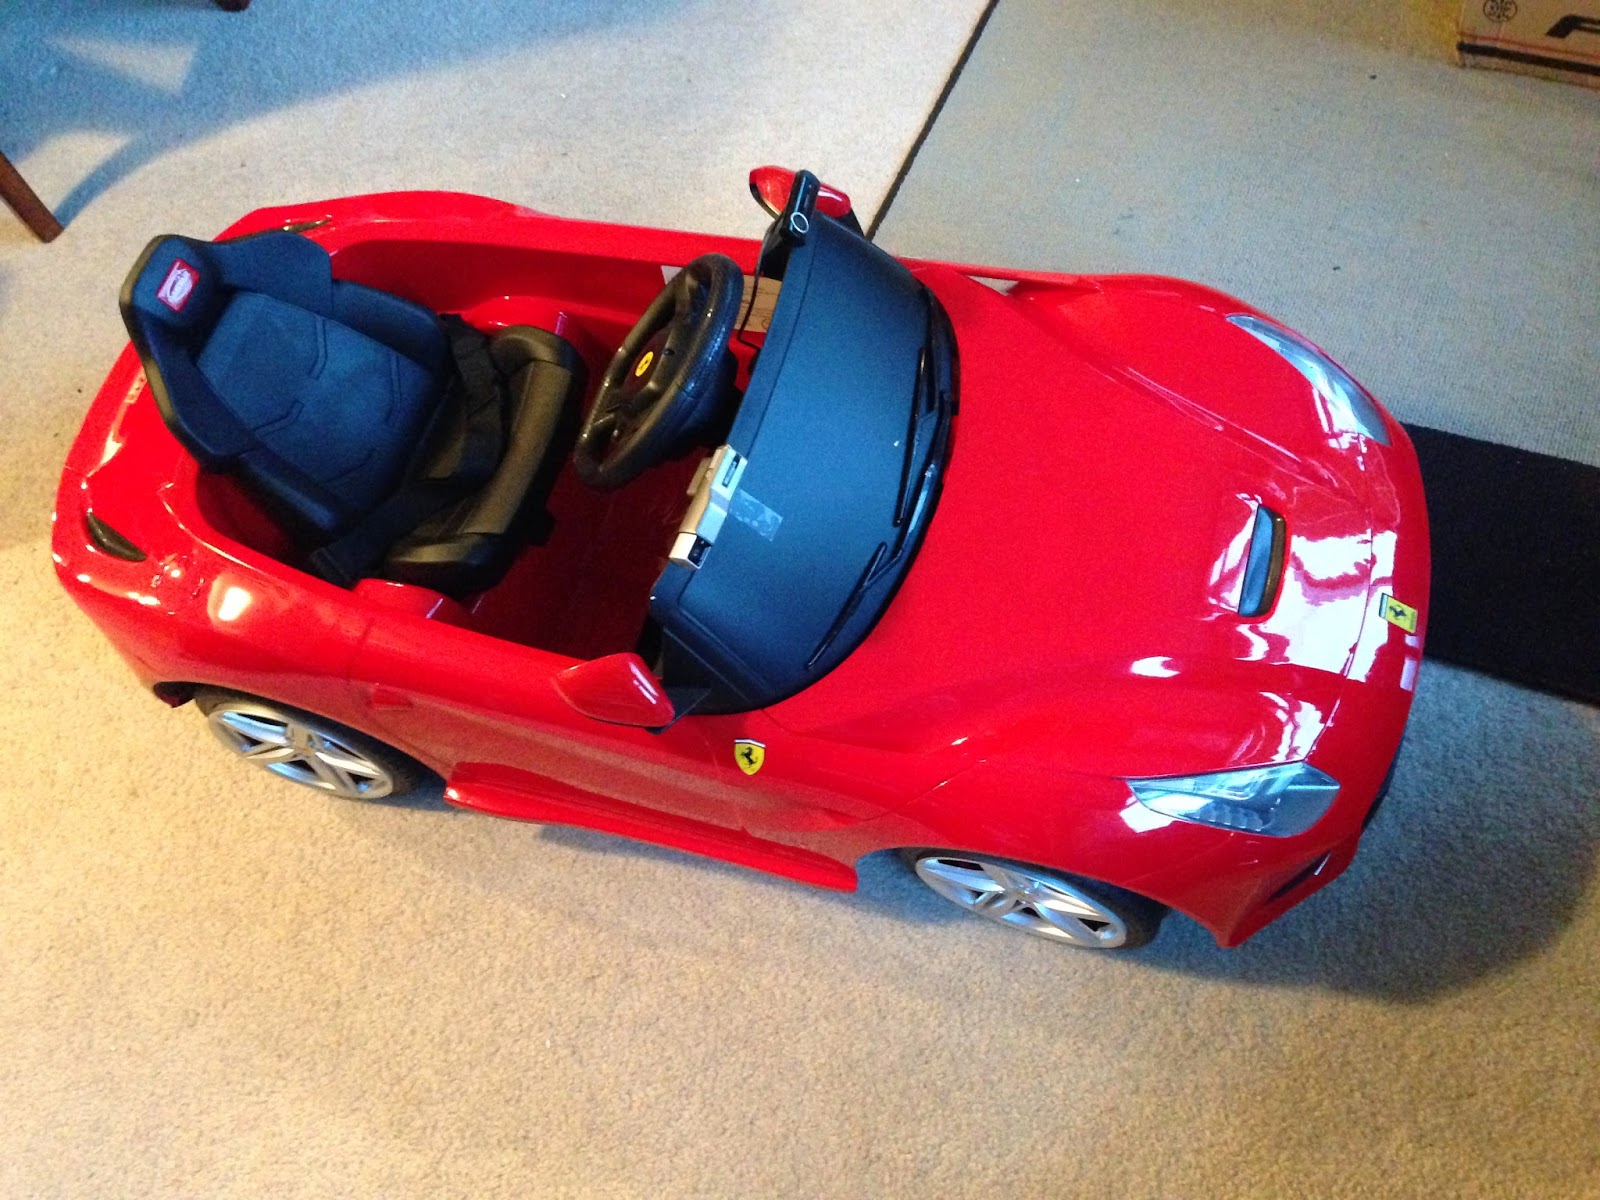 COPOTRON: Self driving toy car